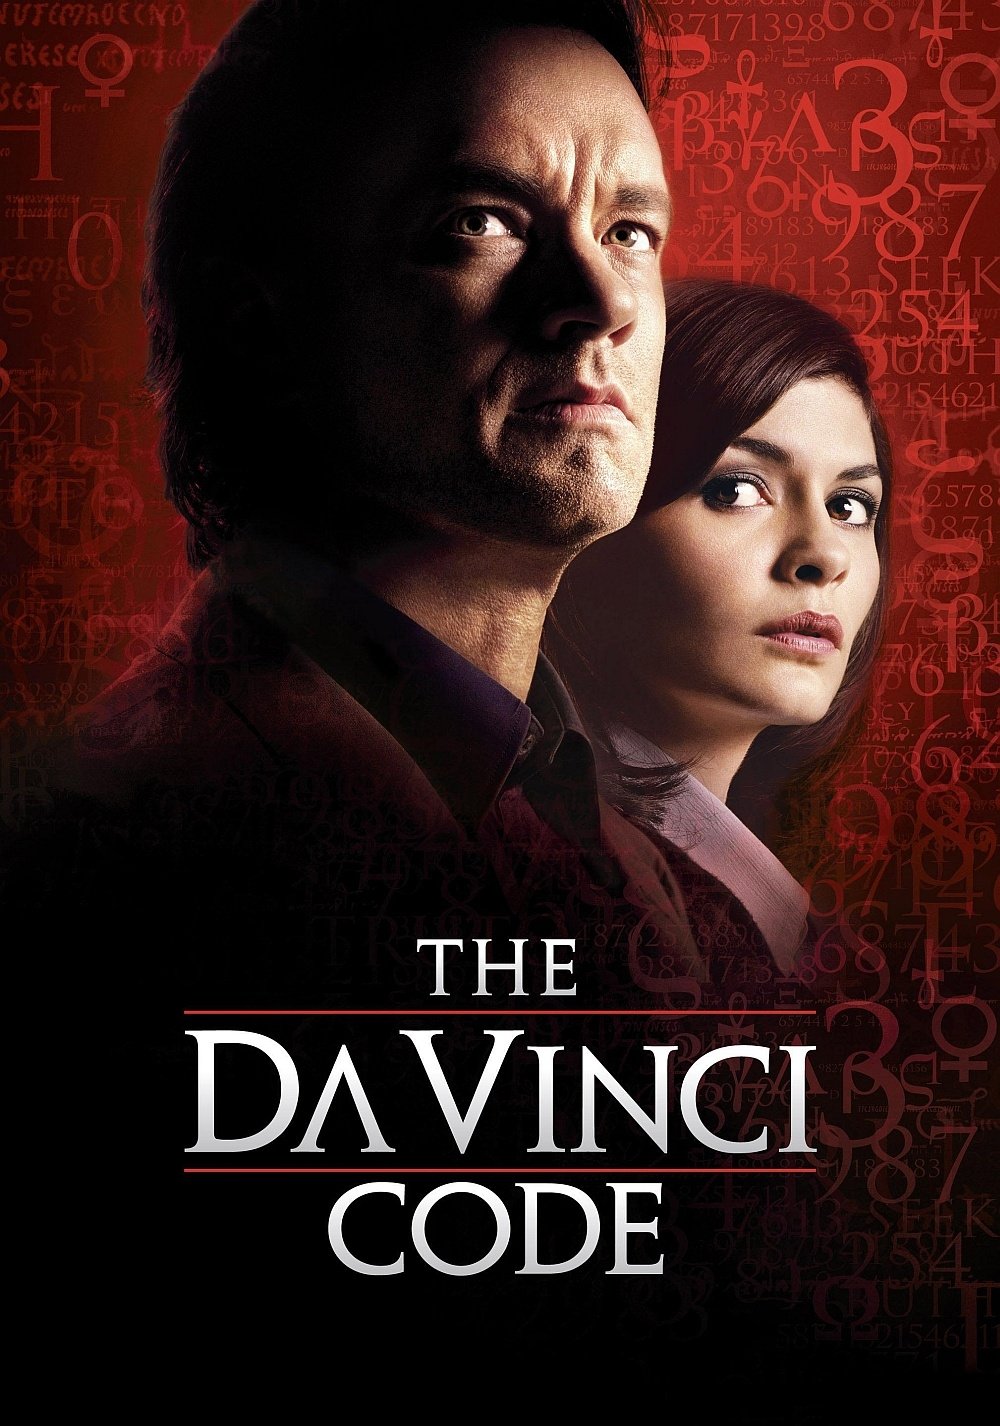 the da vinci code full movie online free streaming